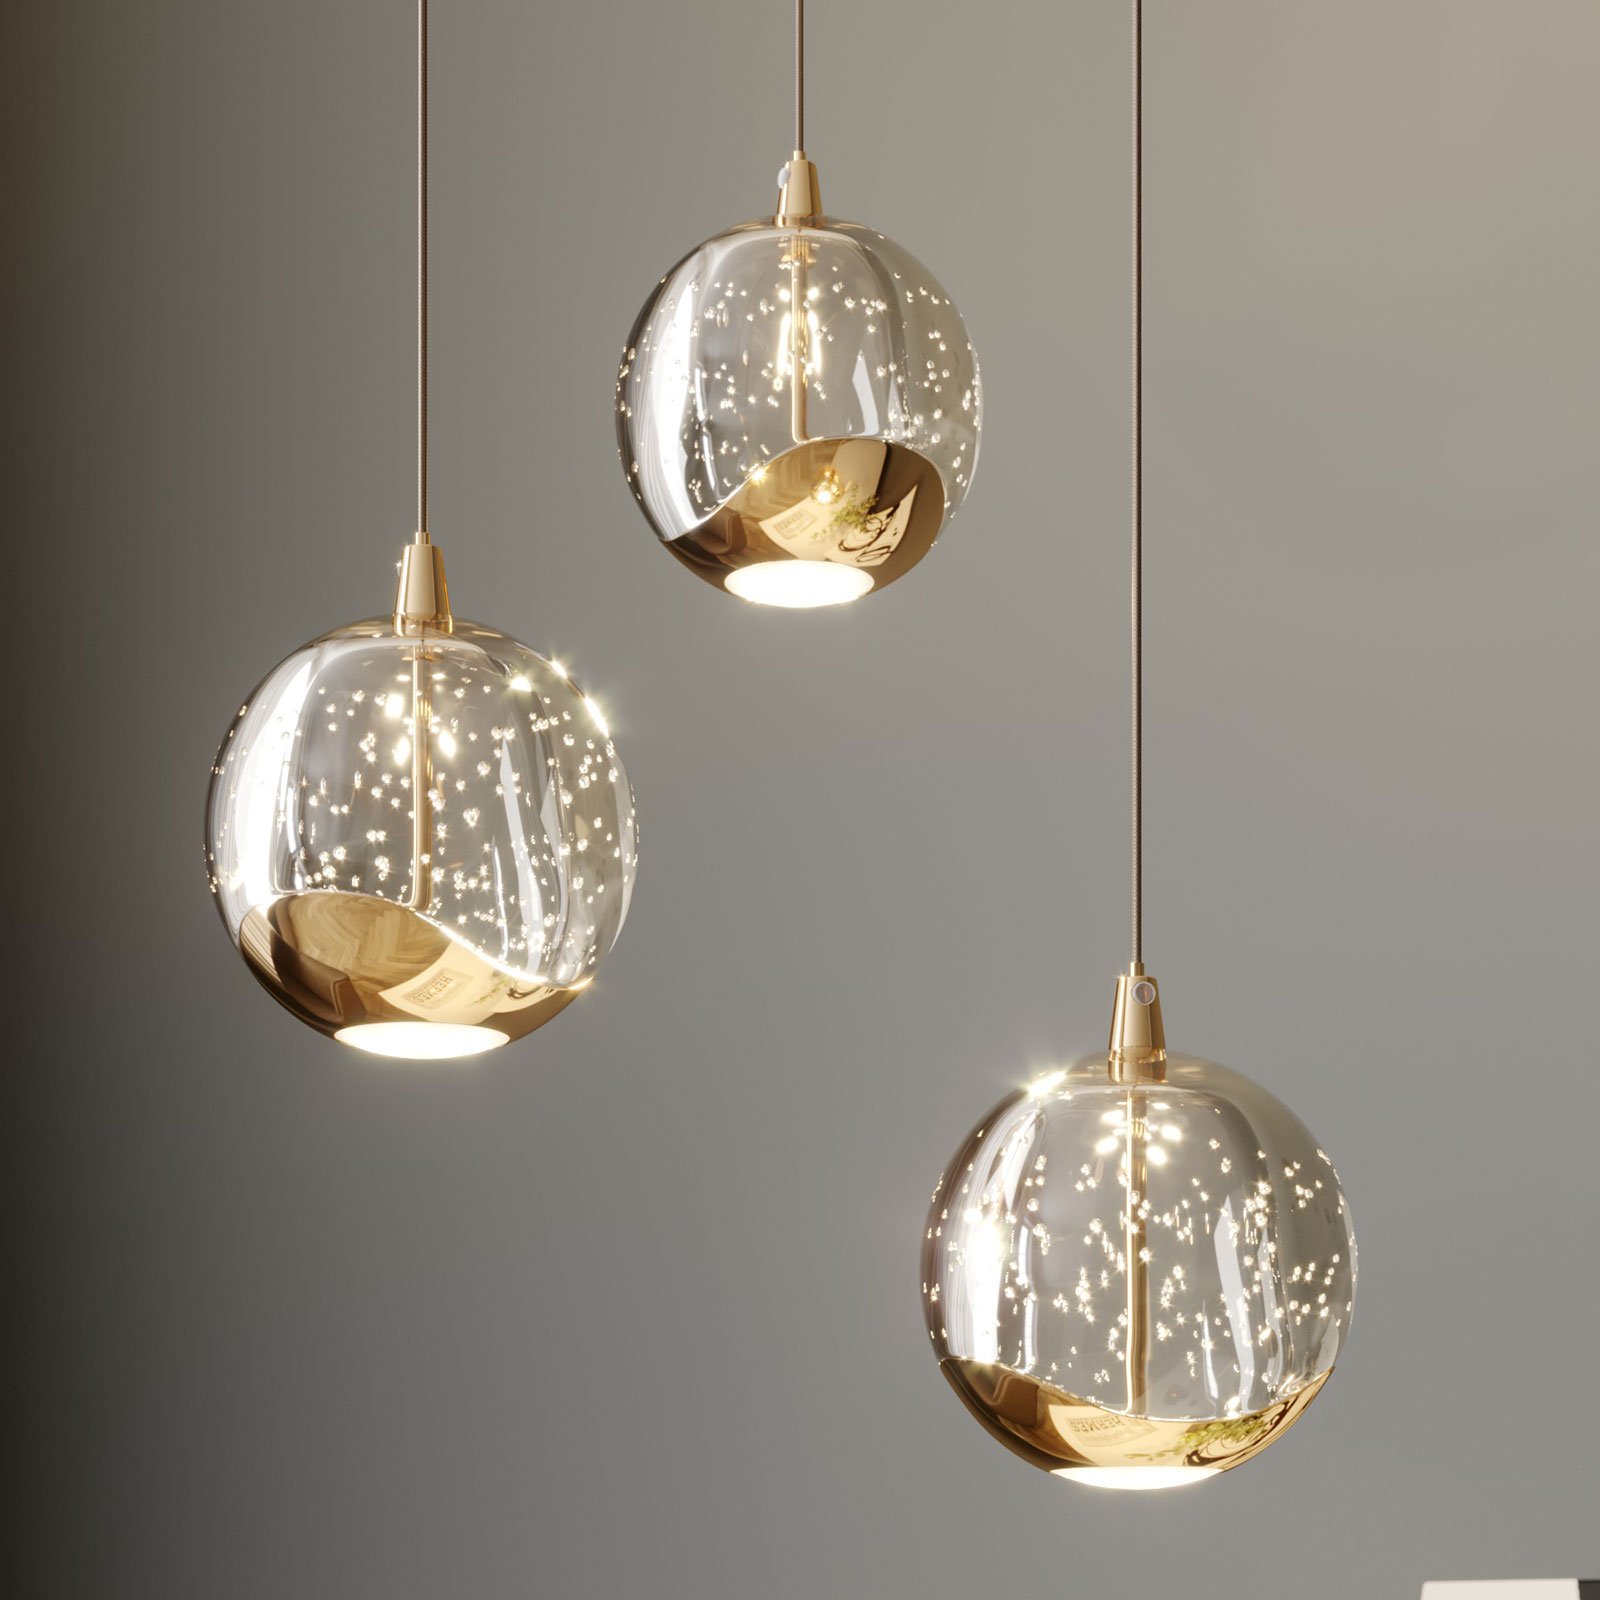 Ruim Vergelijking Vermeend LED hanglamp Hayley met glasbol, 3 lampjes, goud | Lampen24.be